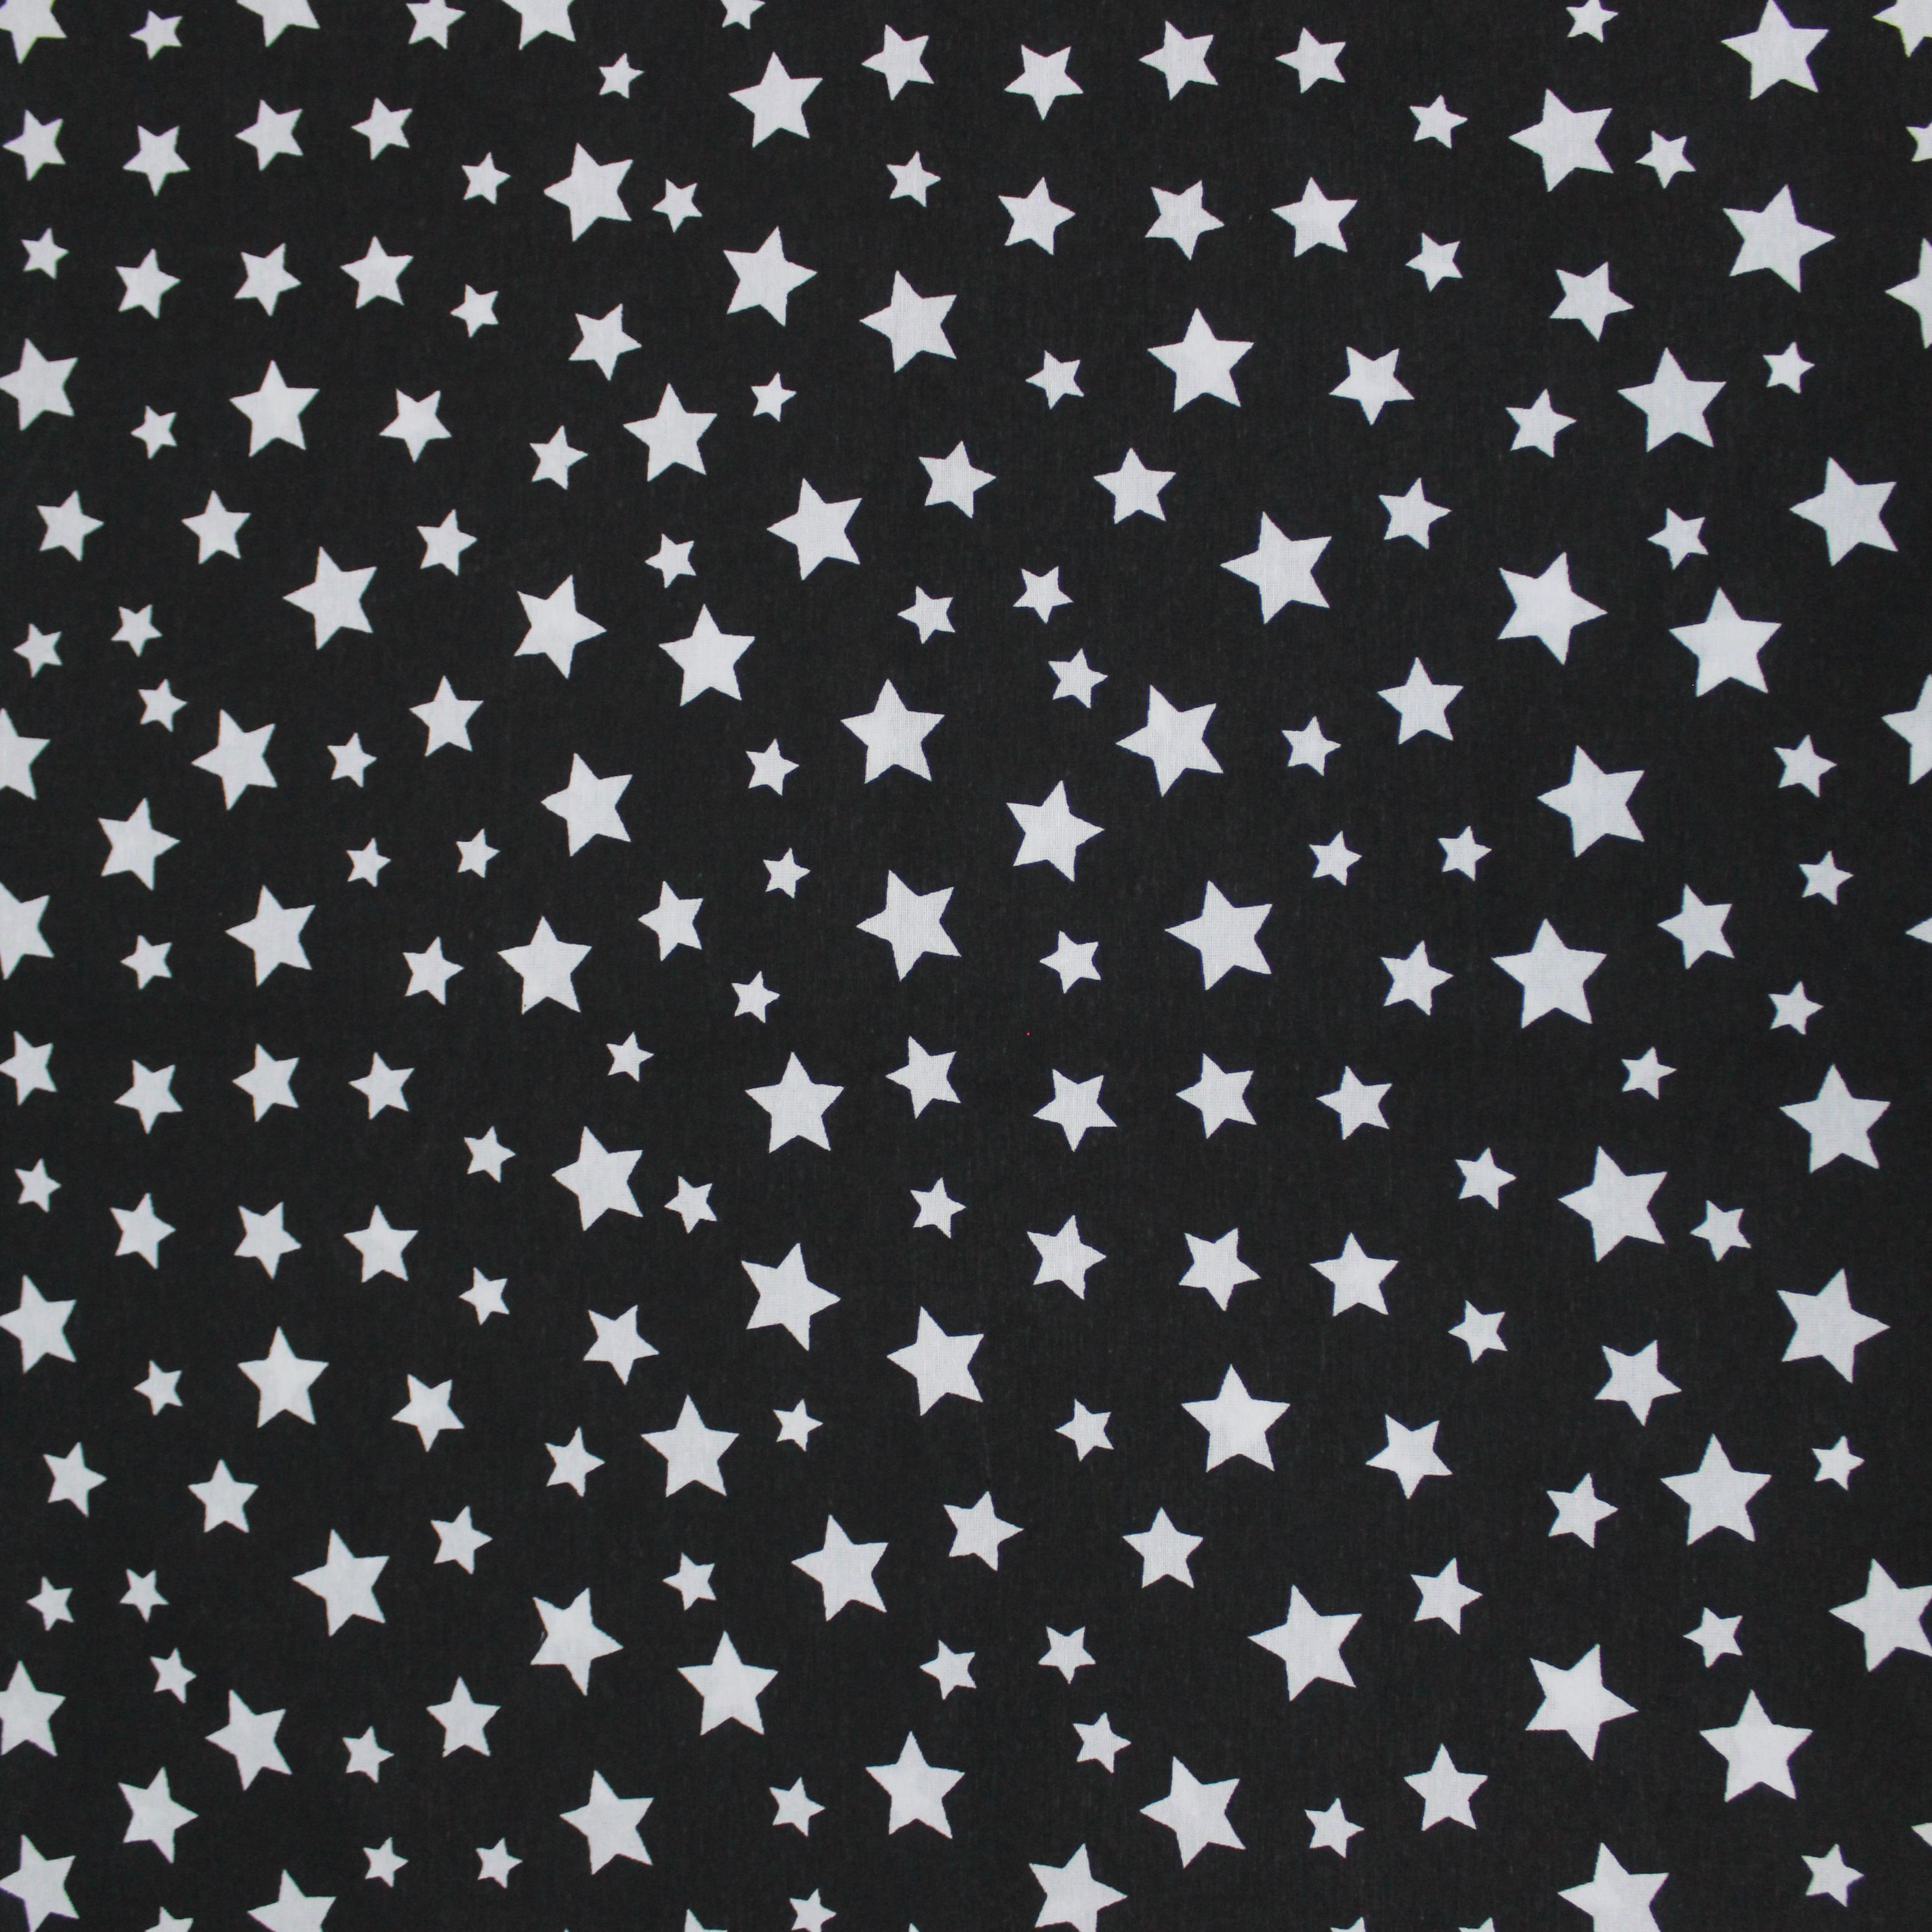 Premium Quality Super Wide Cotton Blend Sheeting "Little White Stars" 94" Wide Black